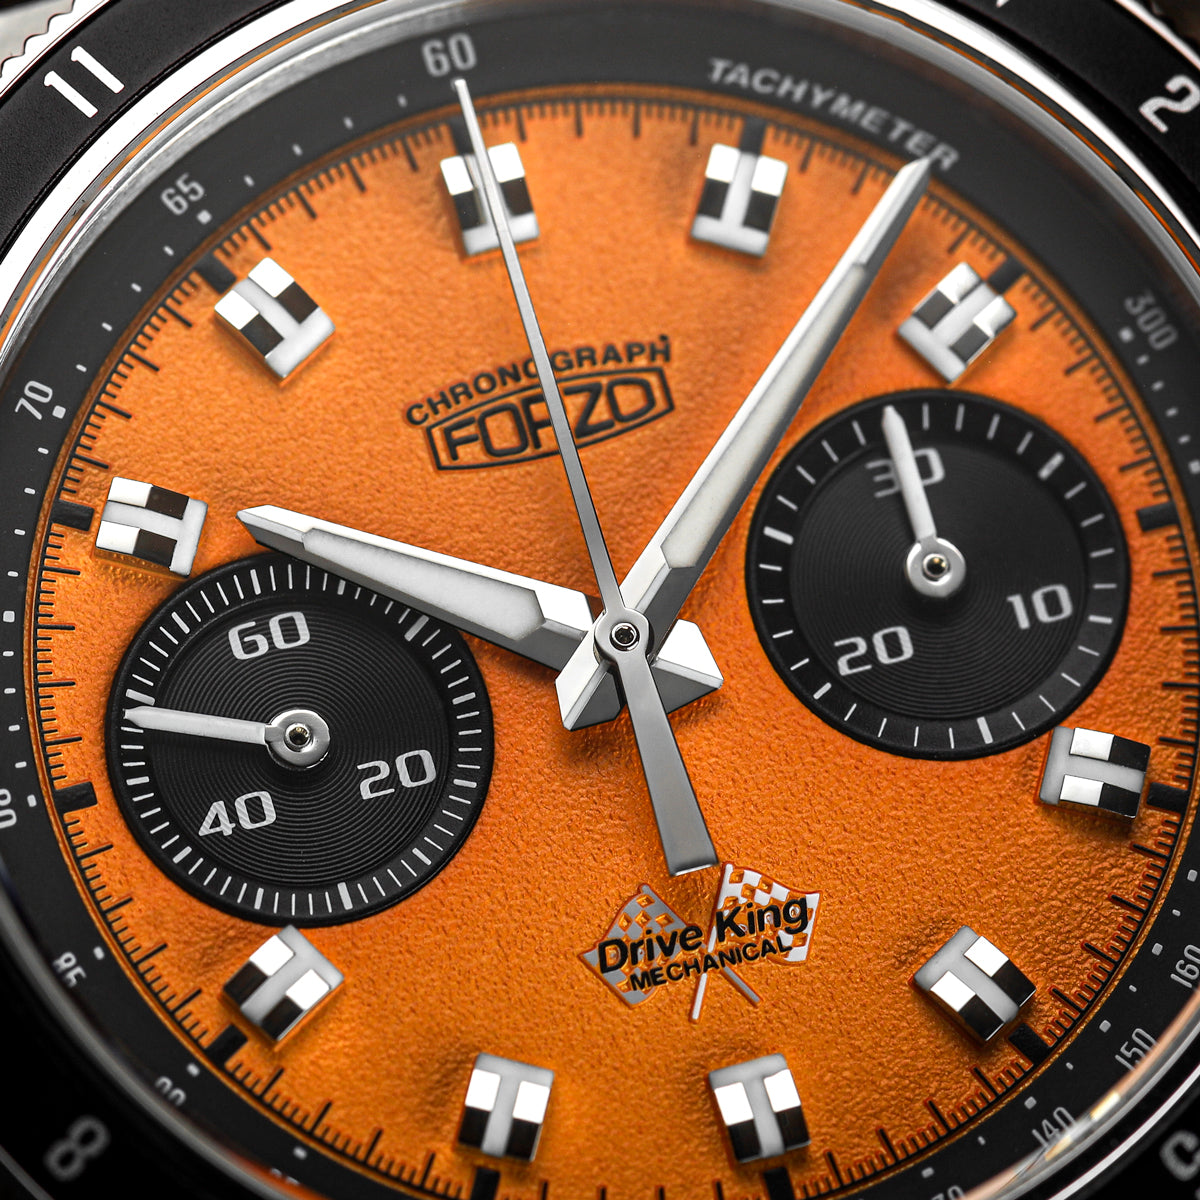 FORZO Drive King Mechanical Chronograph - Orange Dial - 3-Link Bracelet - additional image 2